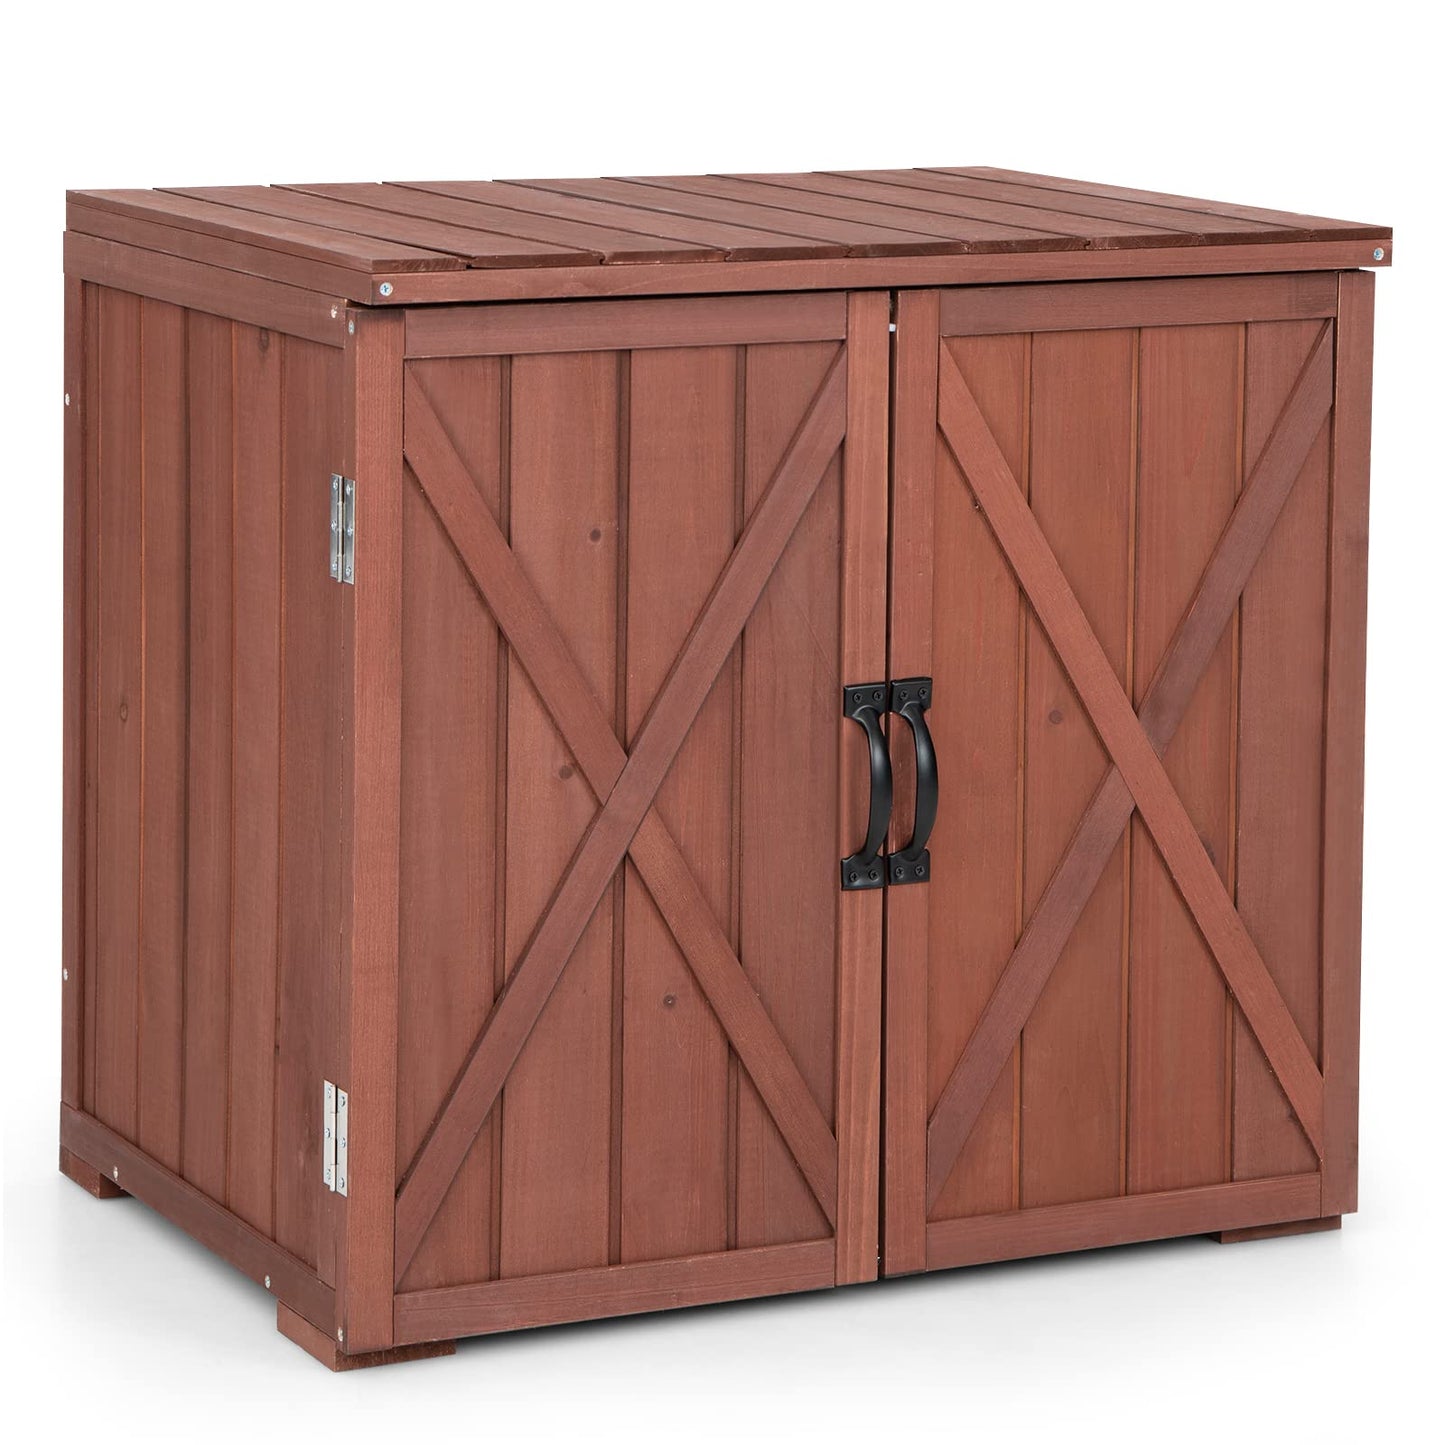 S AFSTAR 30" Outdoor Storage Box, Wooden Storage Deck Box W/Spacious Inner Space & Countertop, Tool Storage Cabinet for Backyard Garden Porch, Easy